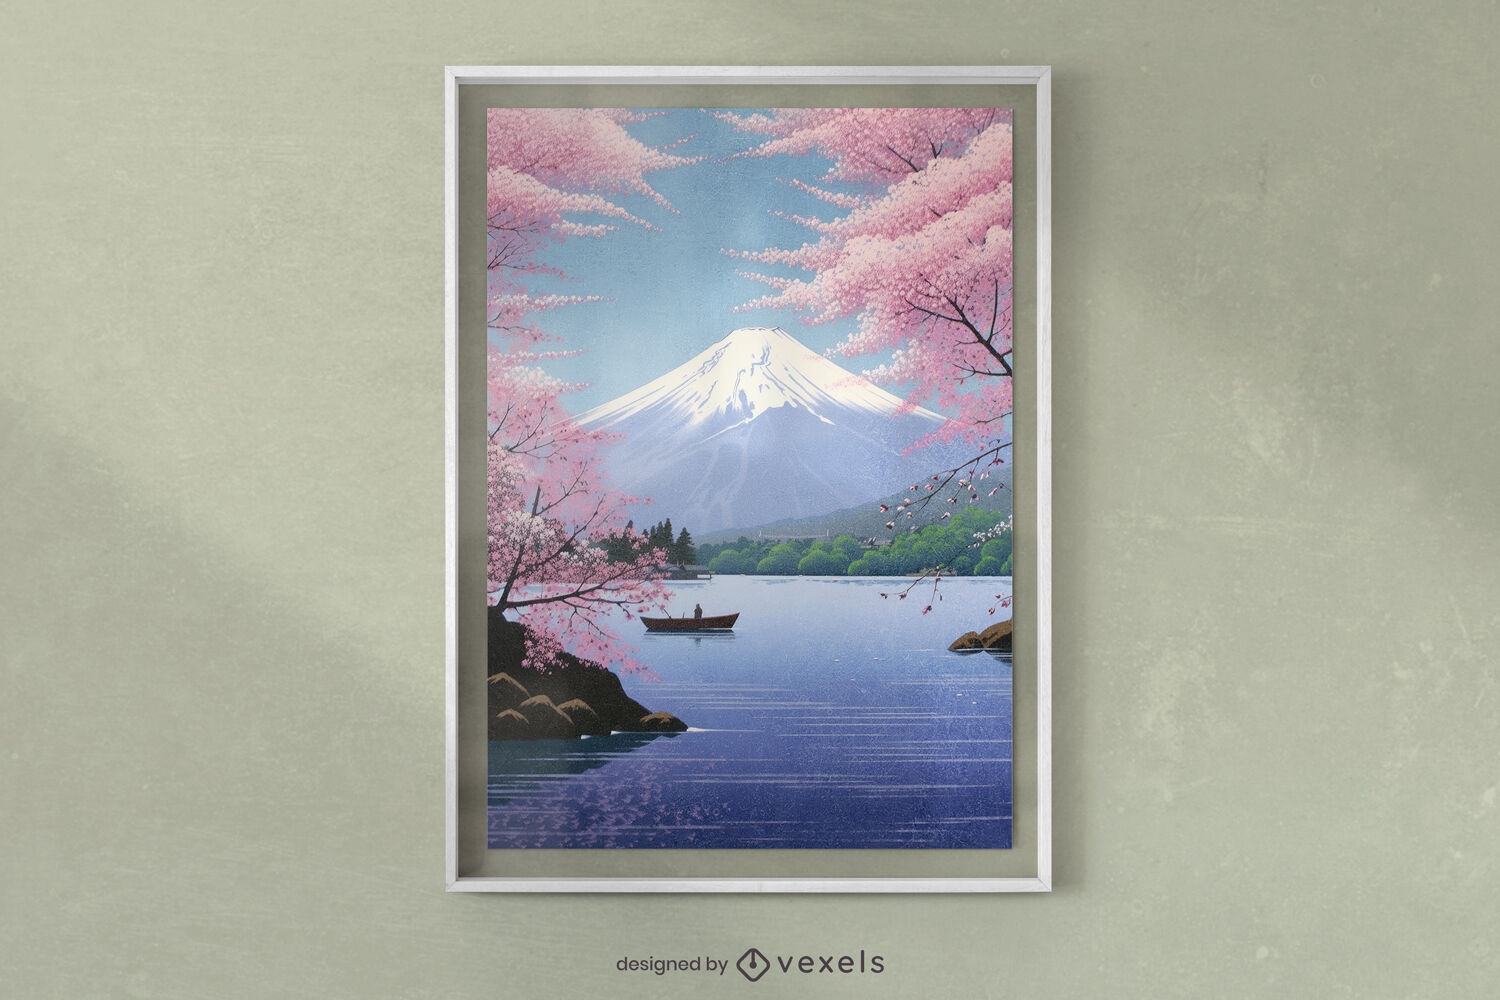 Dise?o de cartel de paisaje japon?s del monte fuji